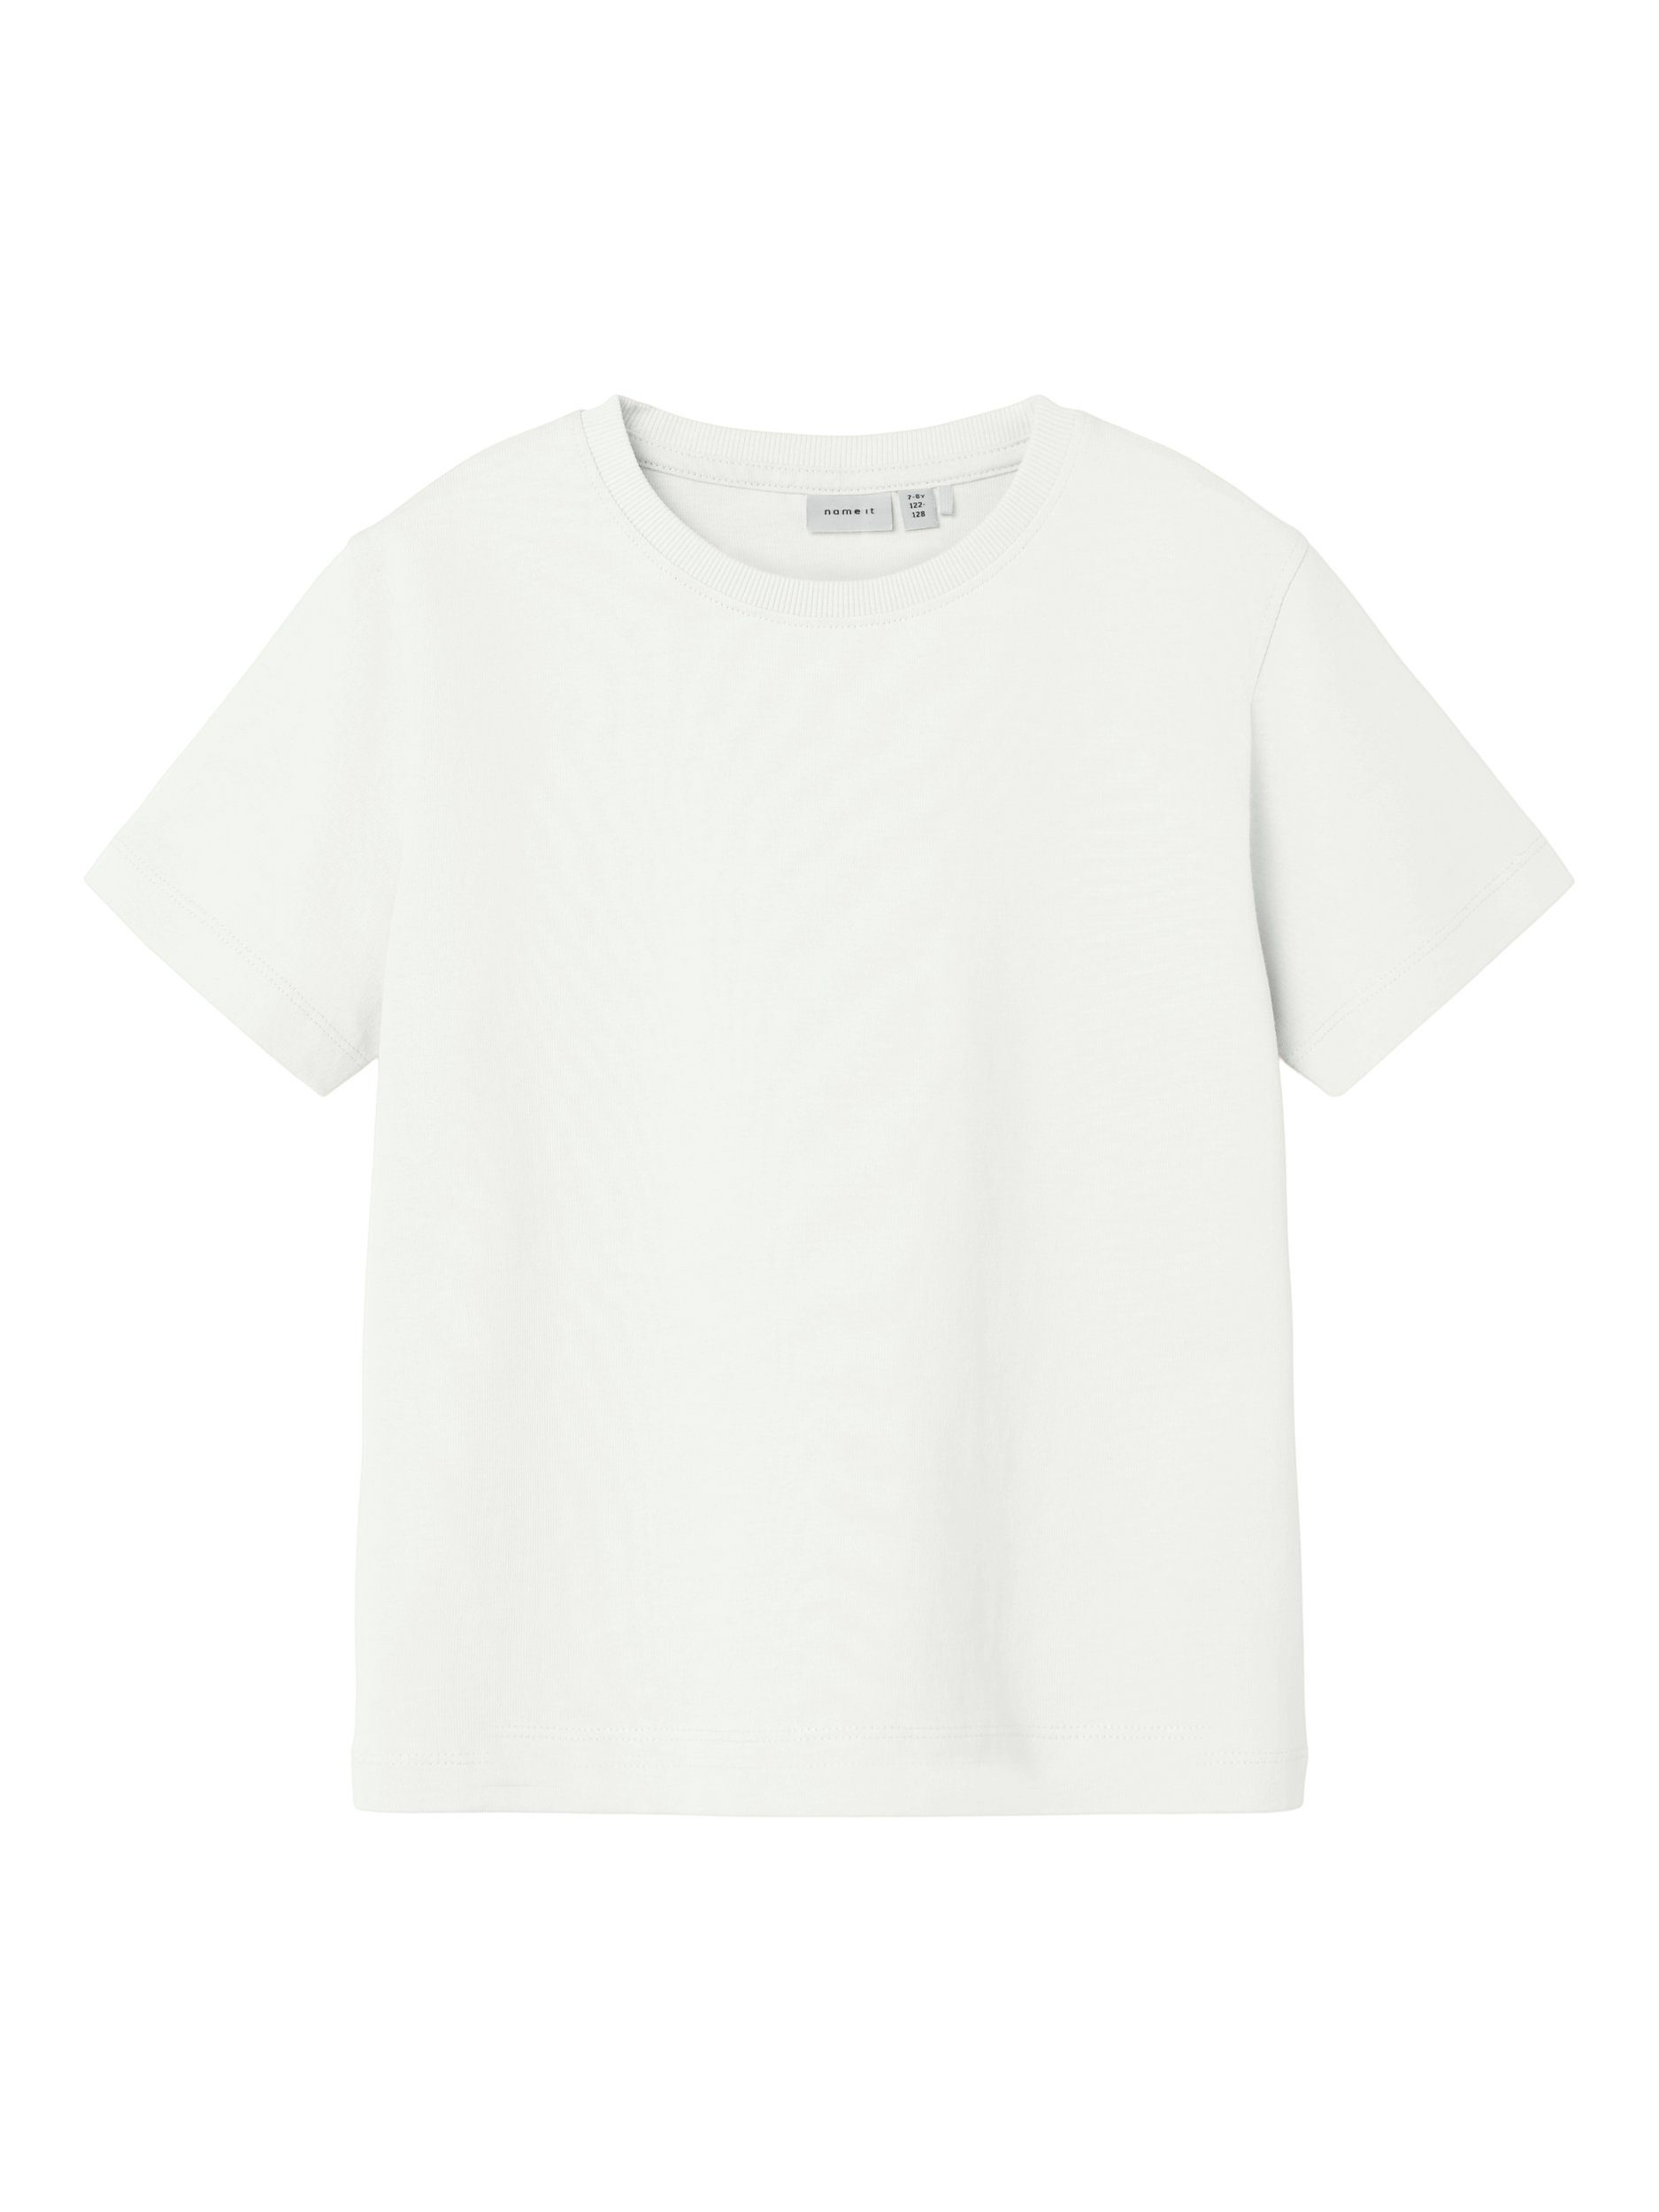 NKFTORINA LOOSE It Name white T-Shirt bright TOP